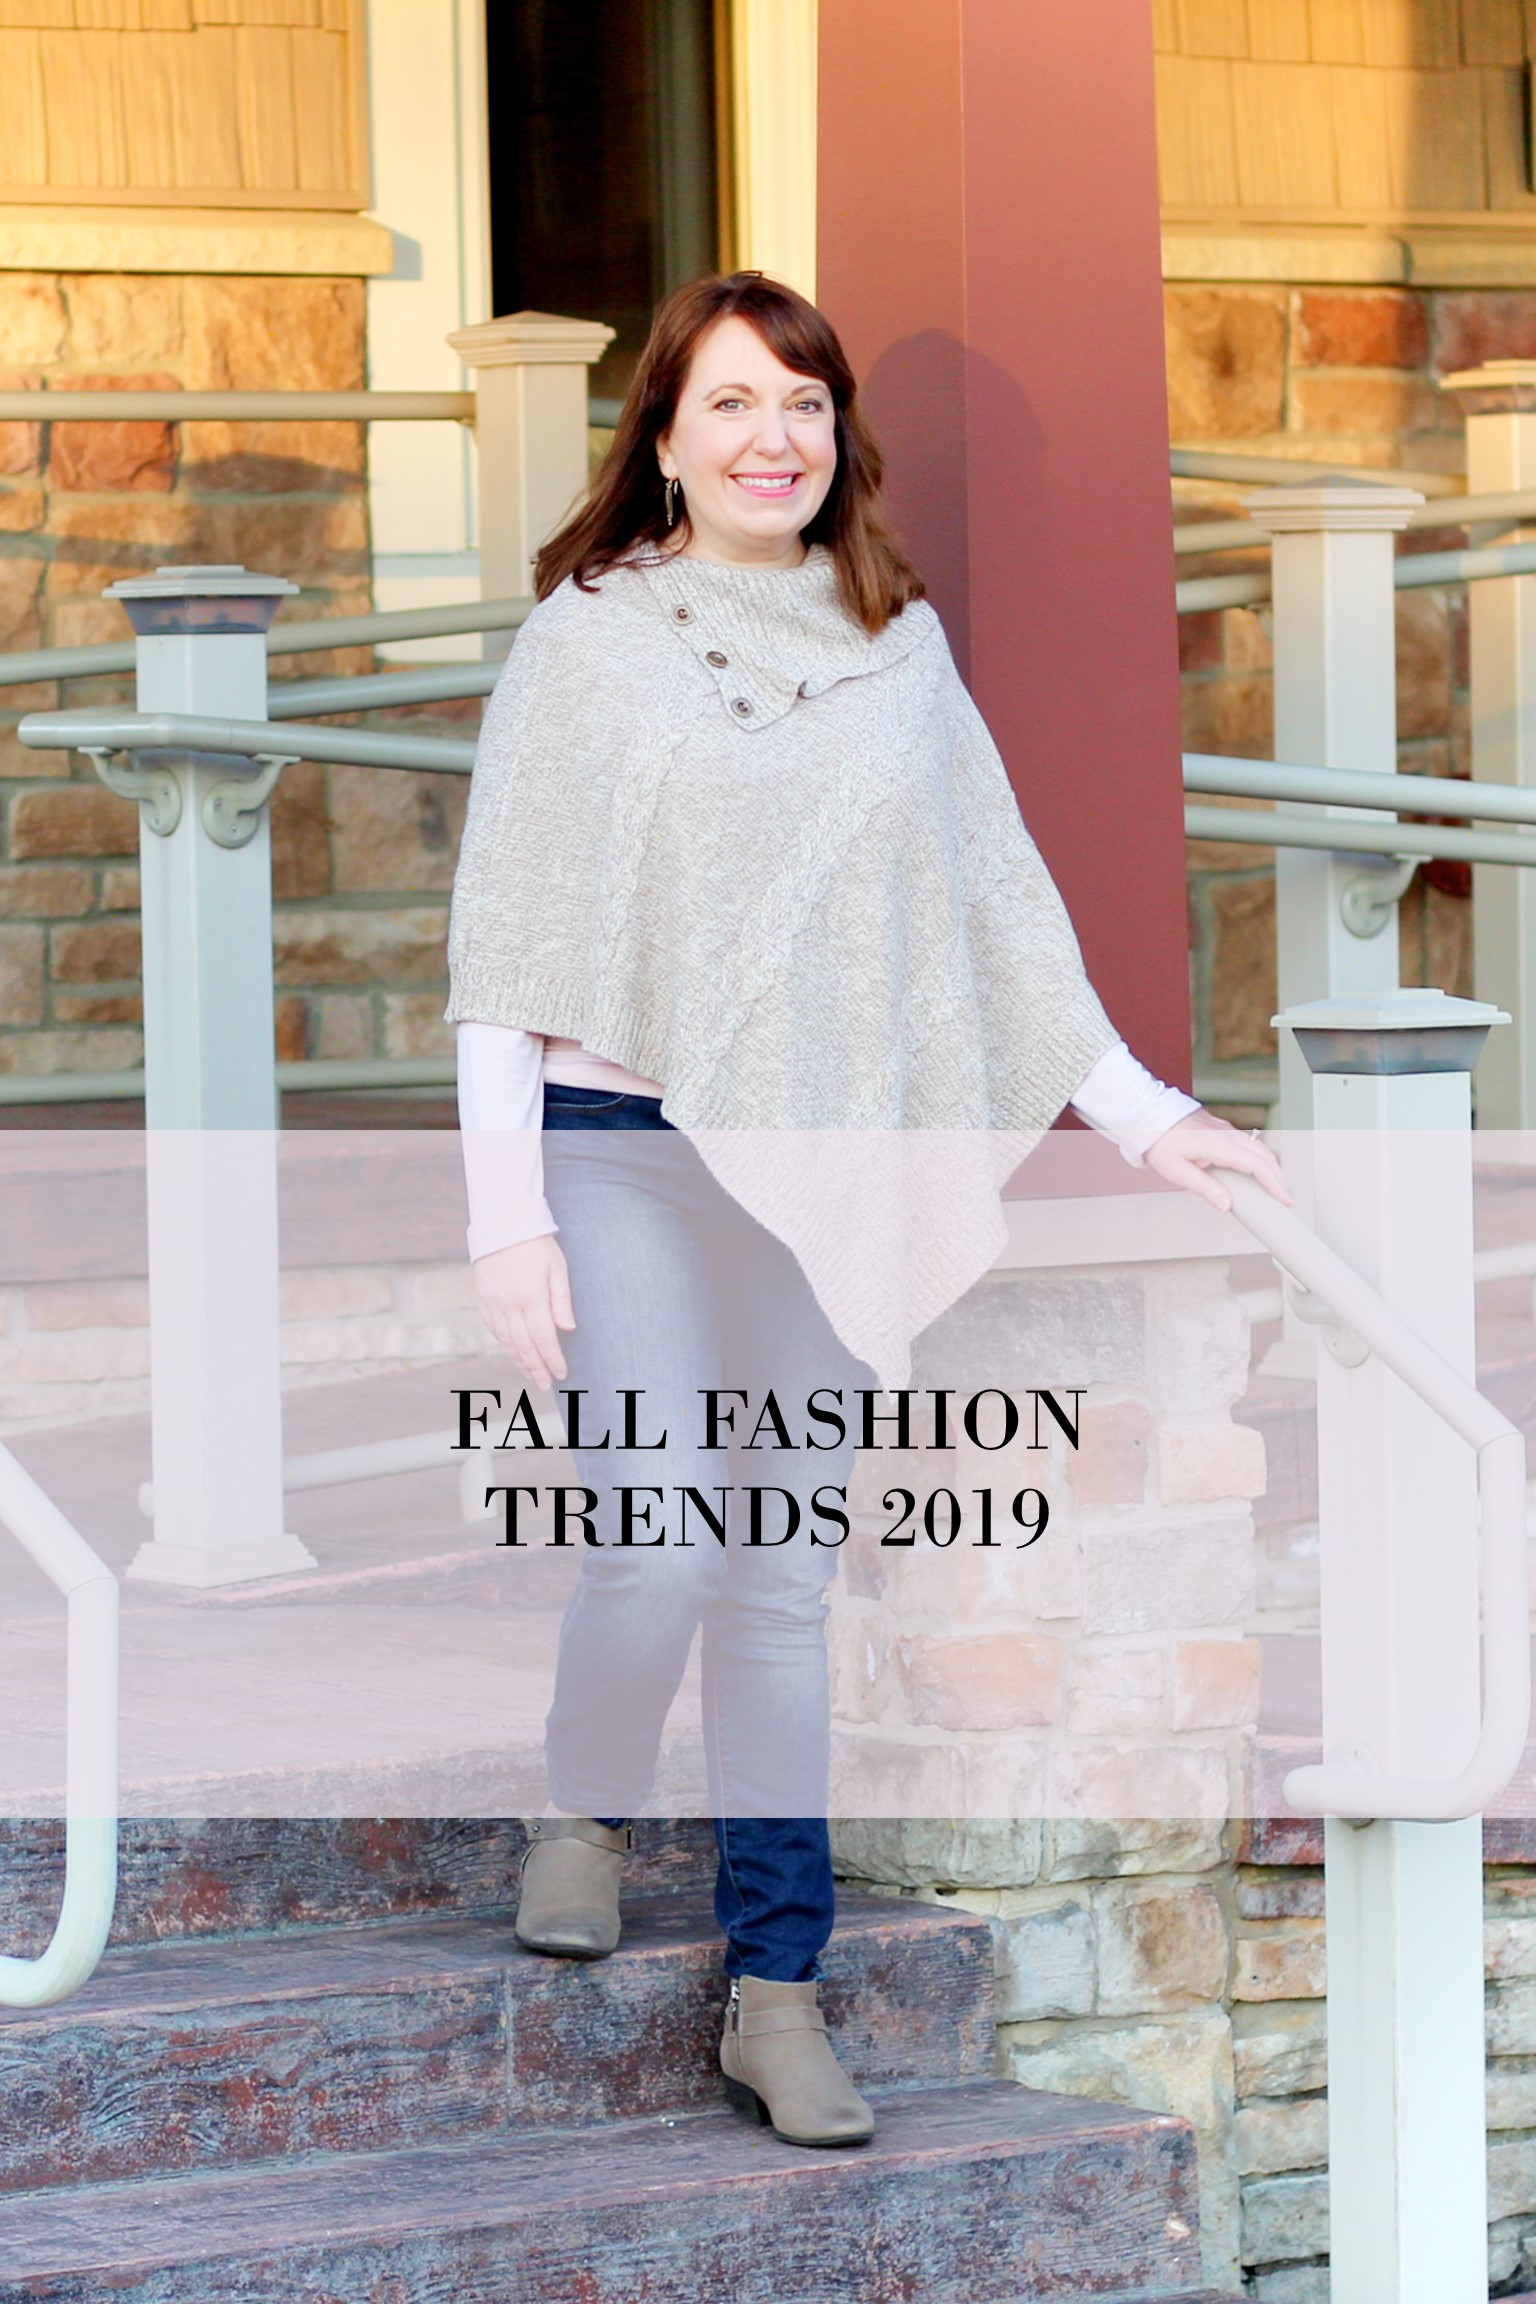 Fall Fashion Trends 2019